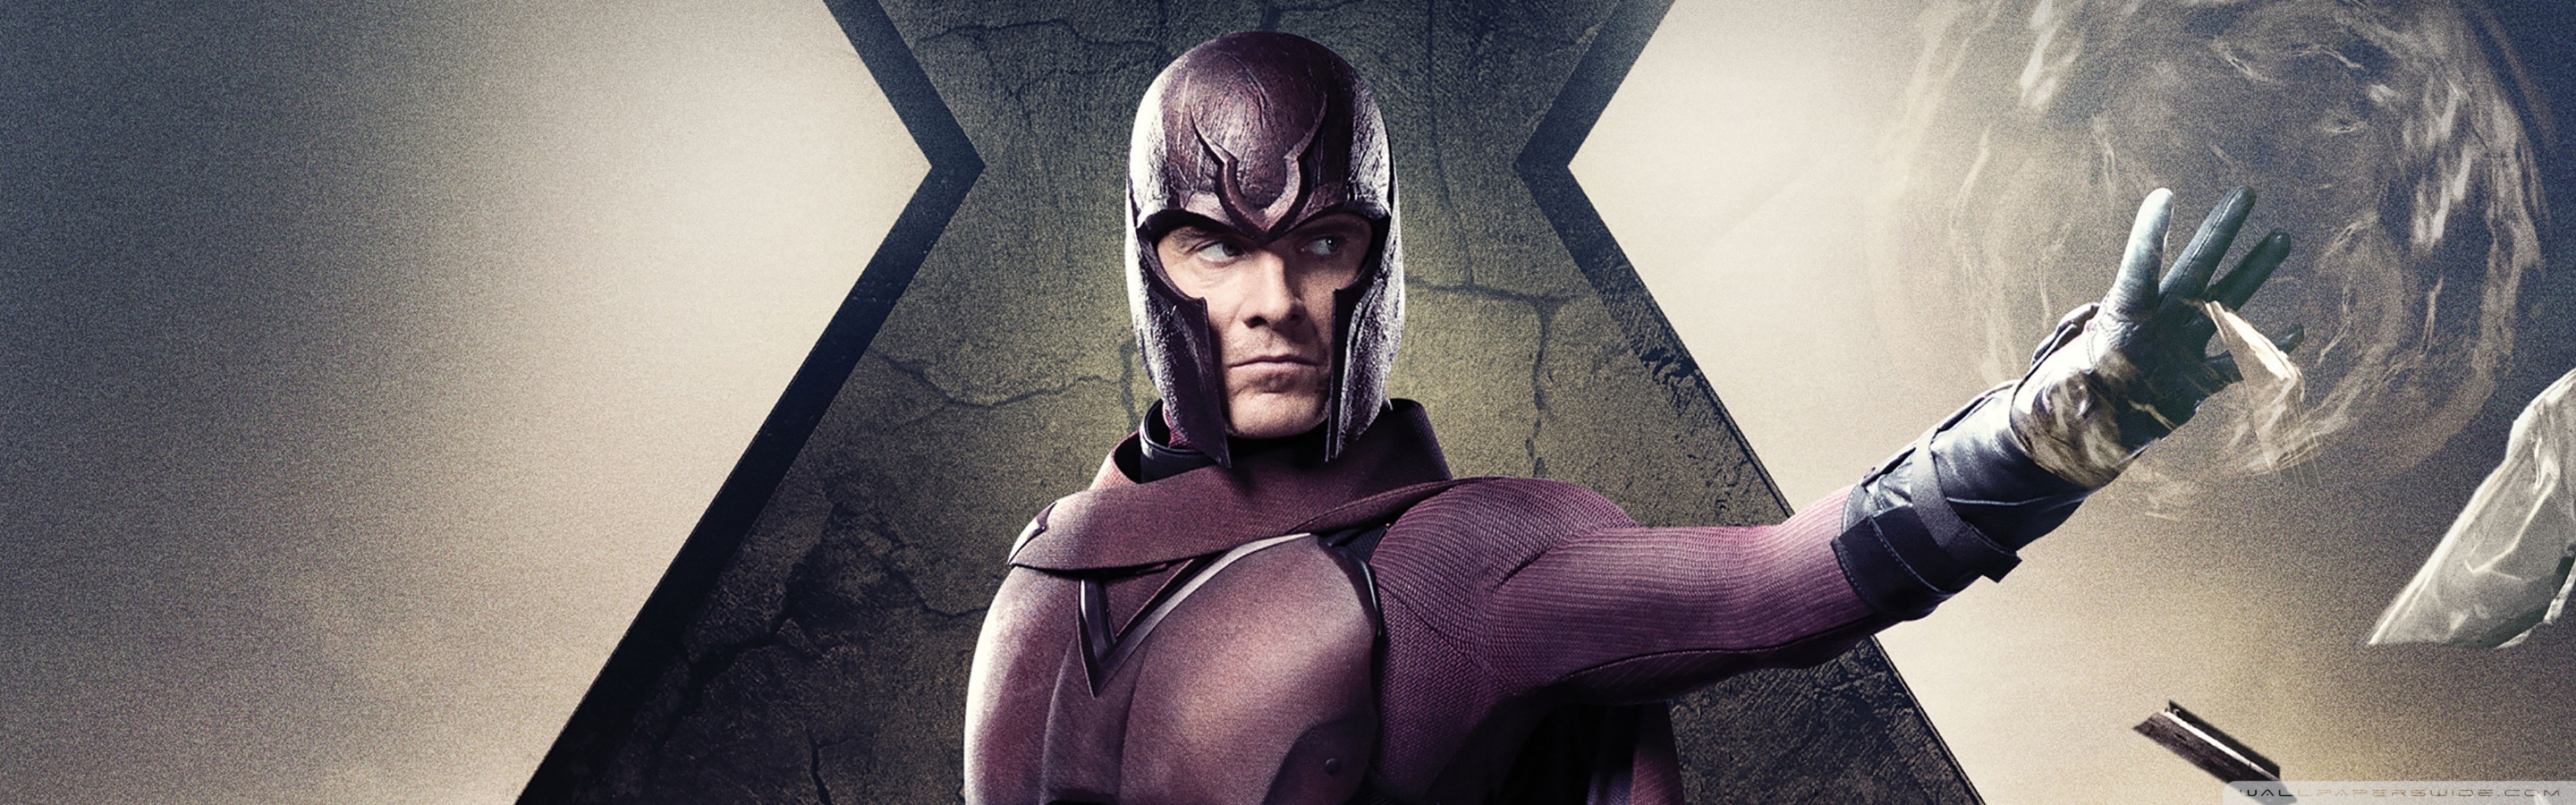 X Men Magneto - HD Wallpaper 